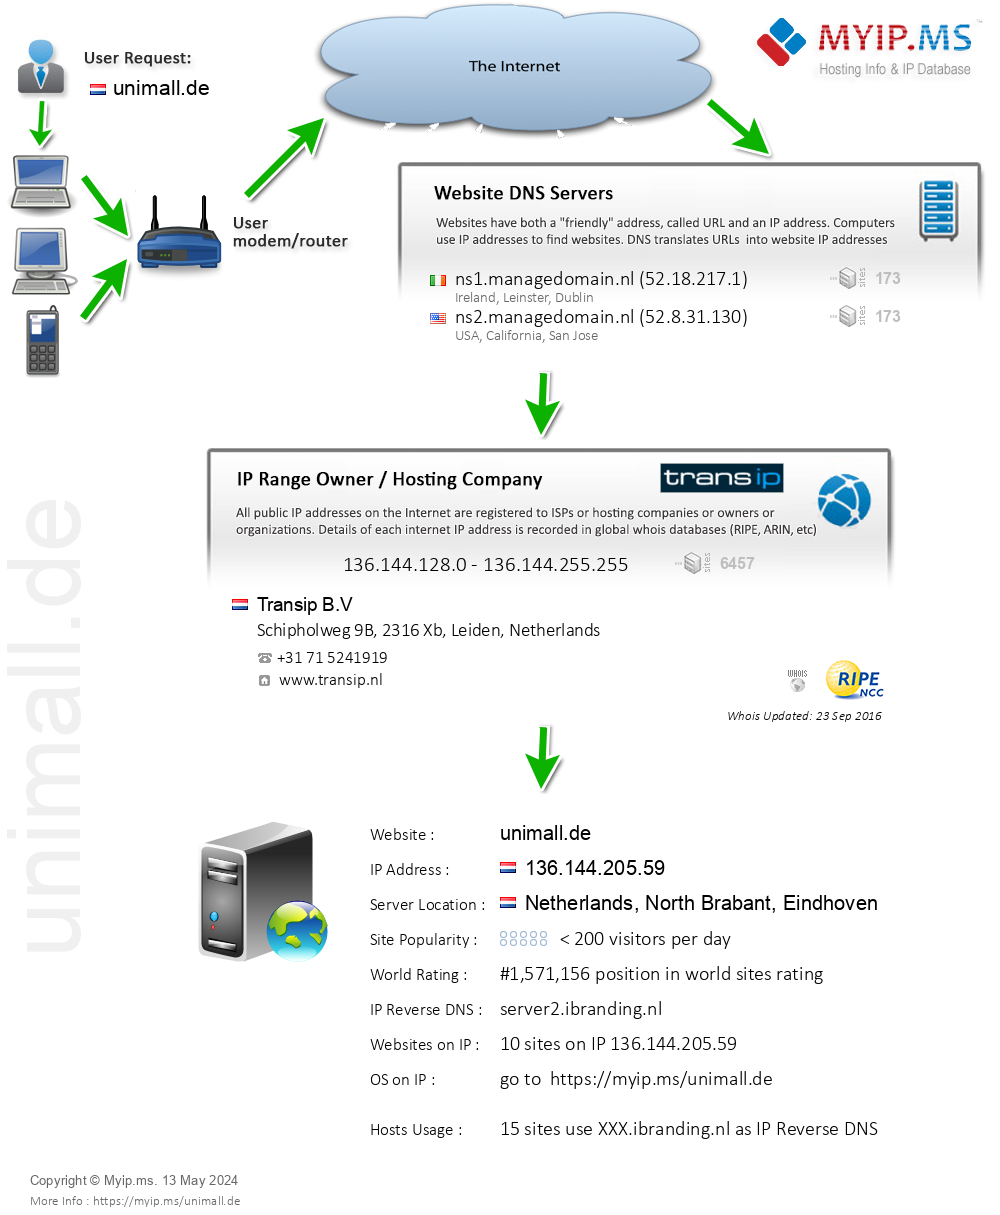 Unimall.de - Website Hosting Visual IP Diagram